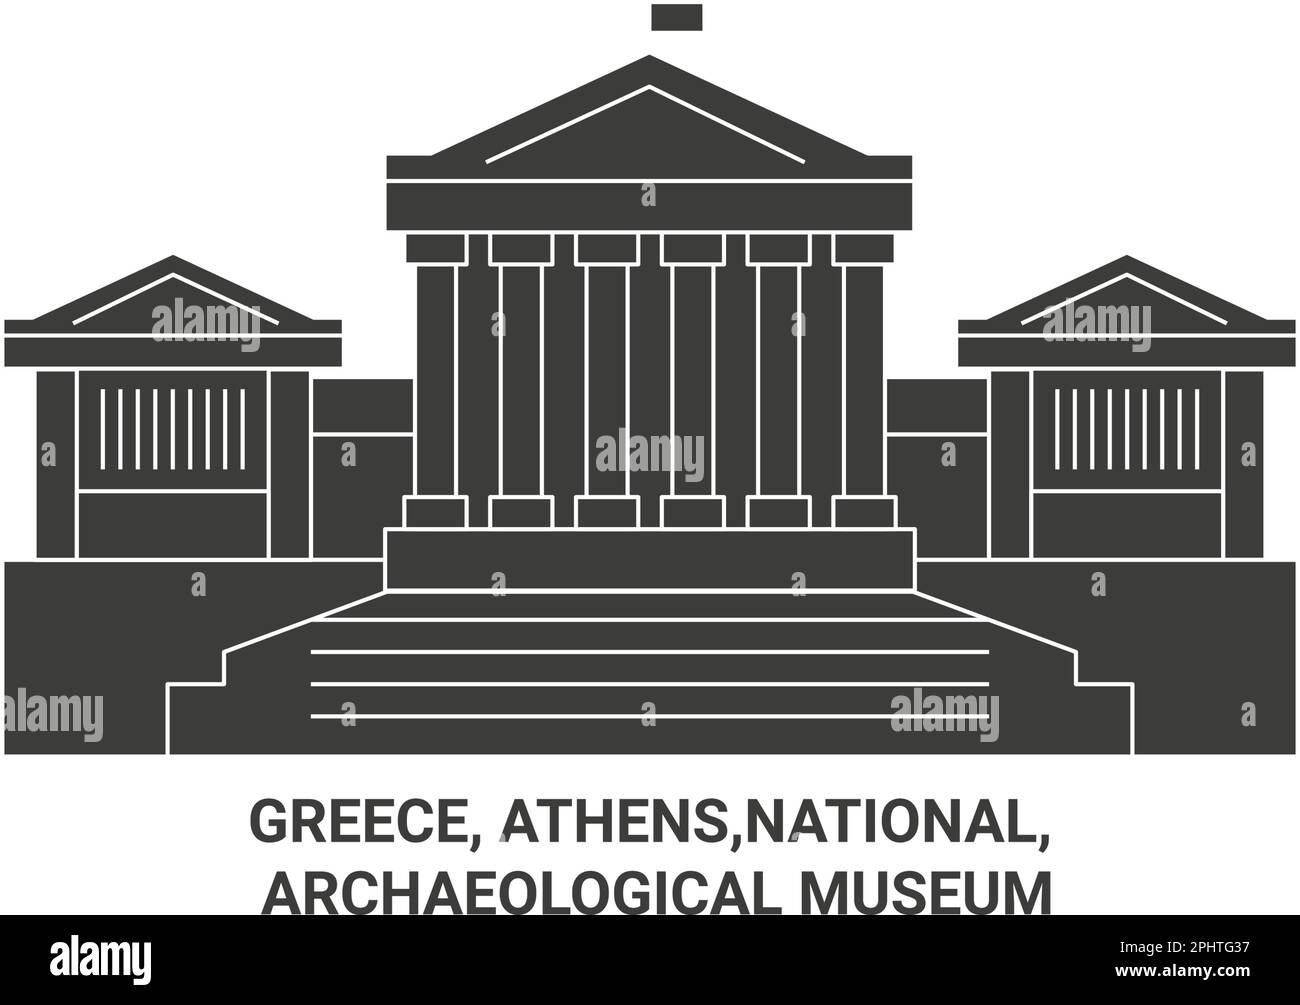 Greece, Athens,National, Archaeological Museum travel landmark vector illustration Stock Vector